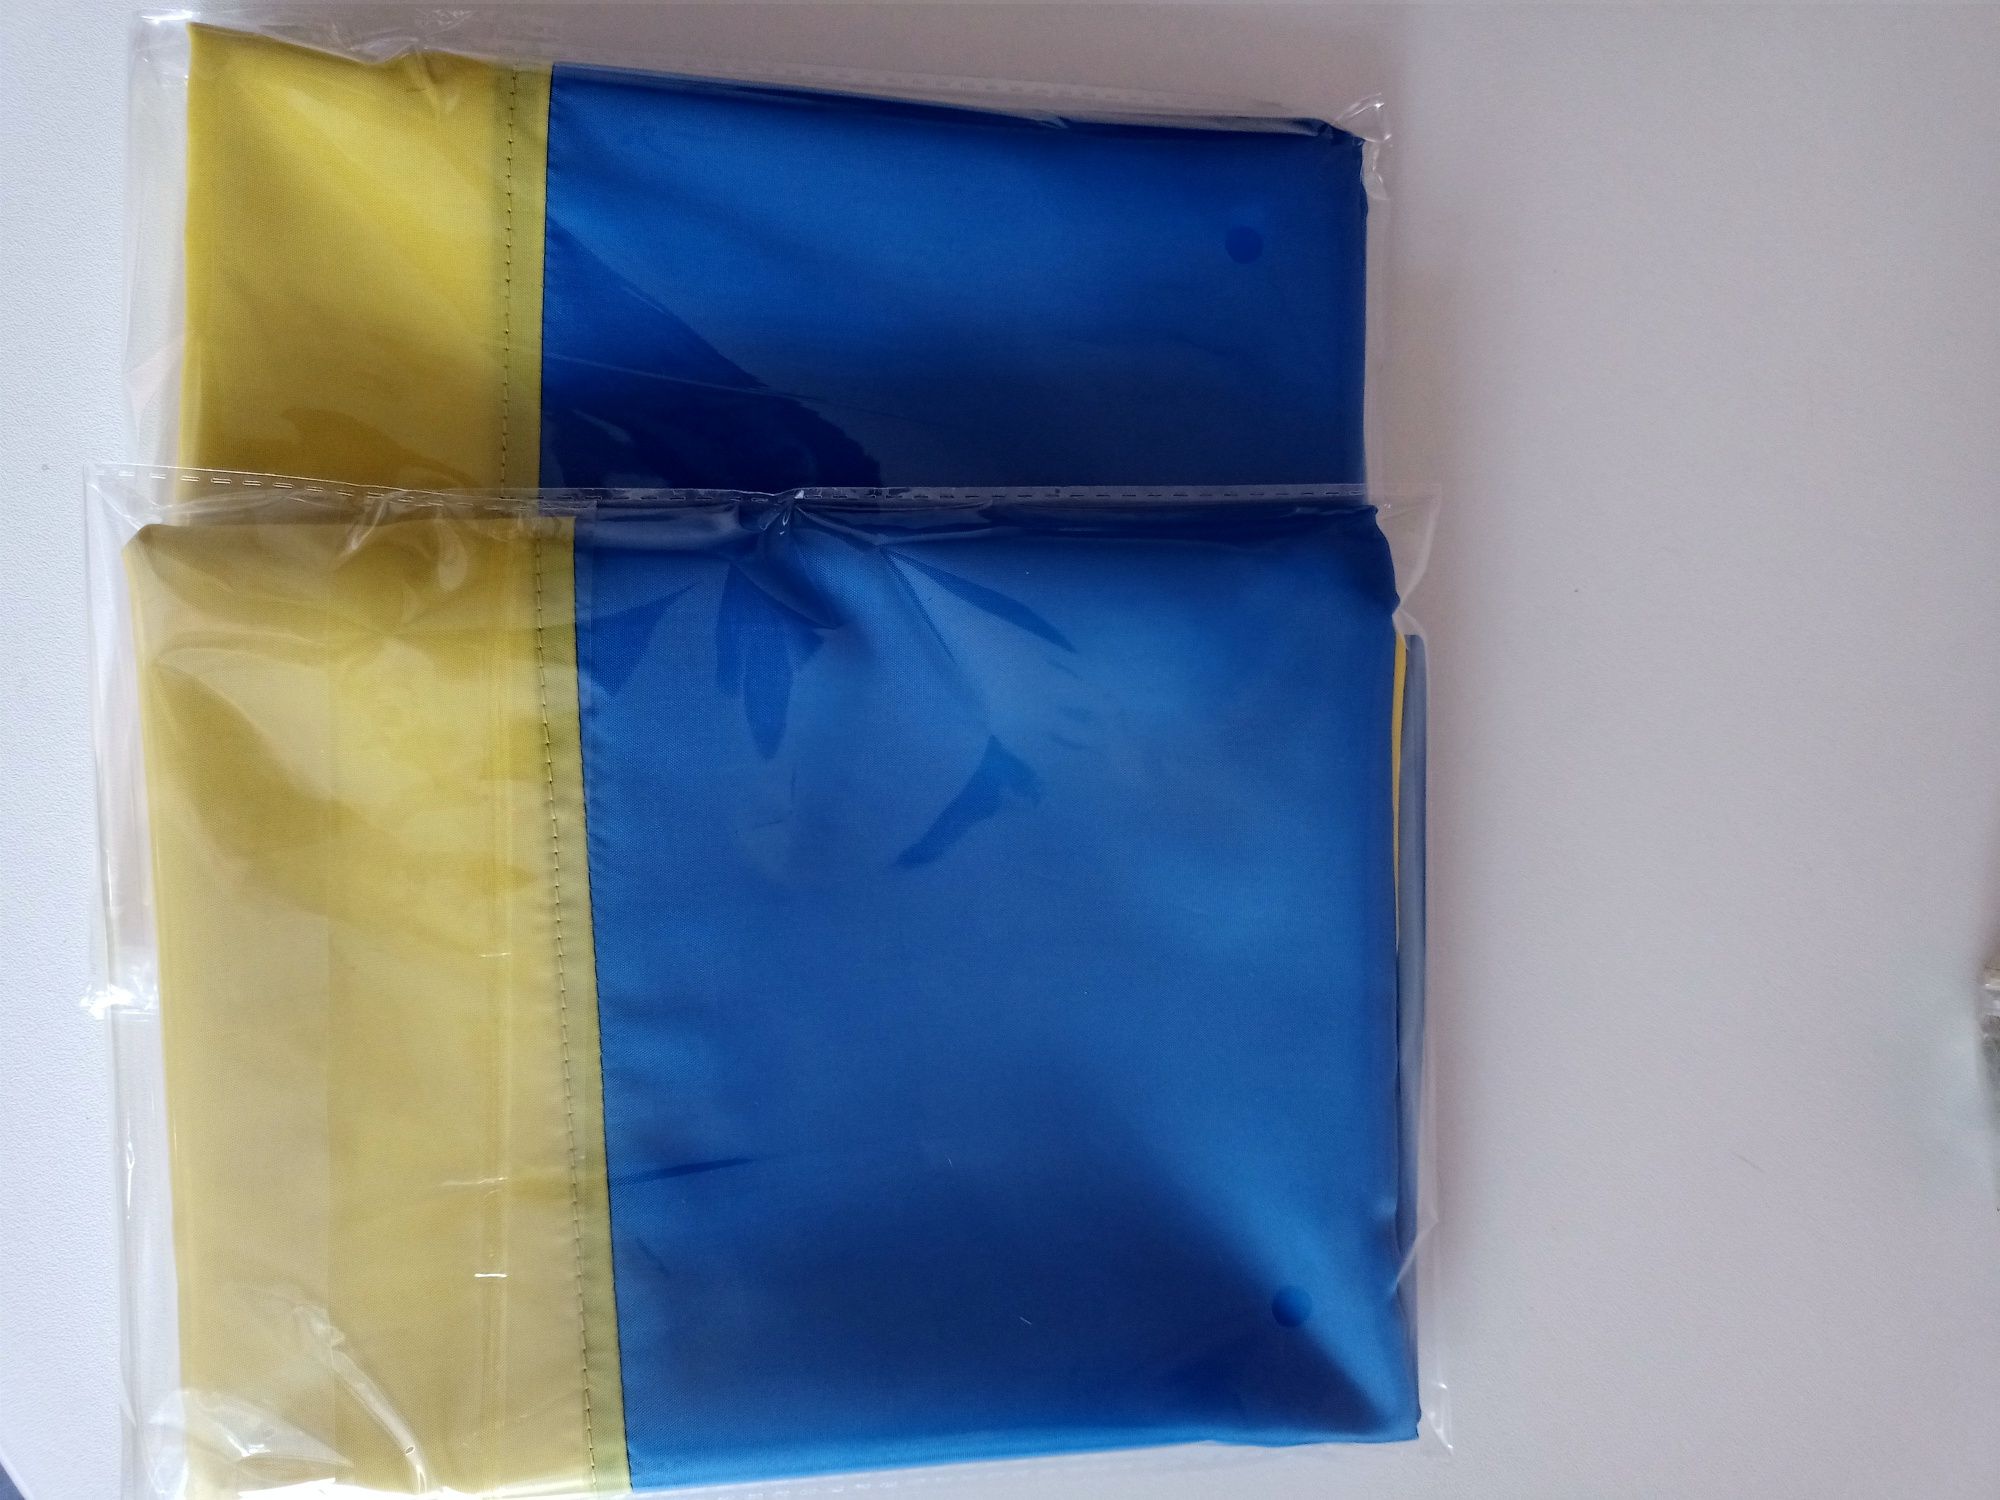 Прапор України 91*66 см, флаг, нейлон